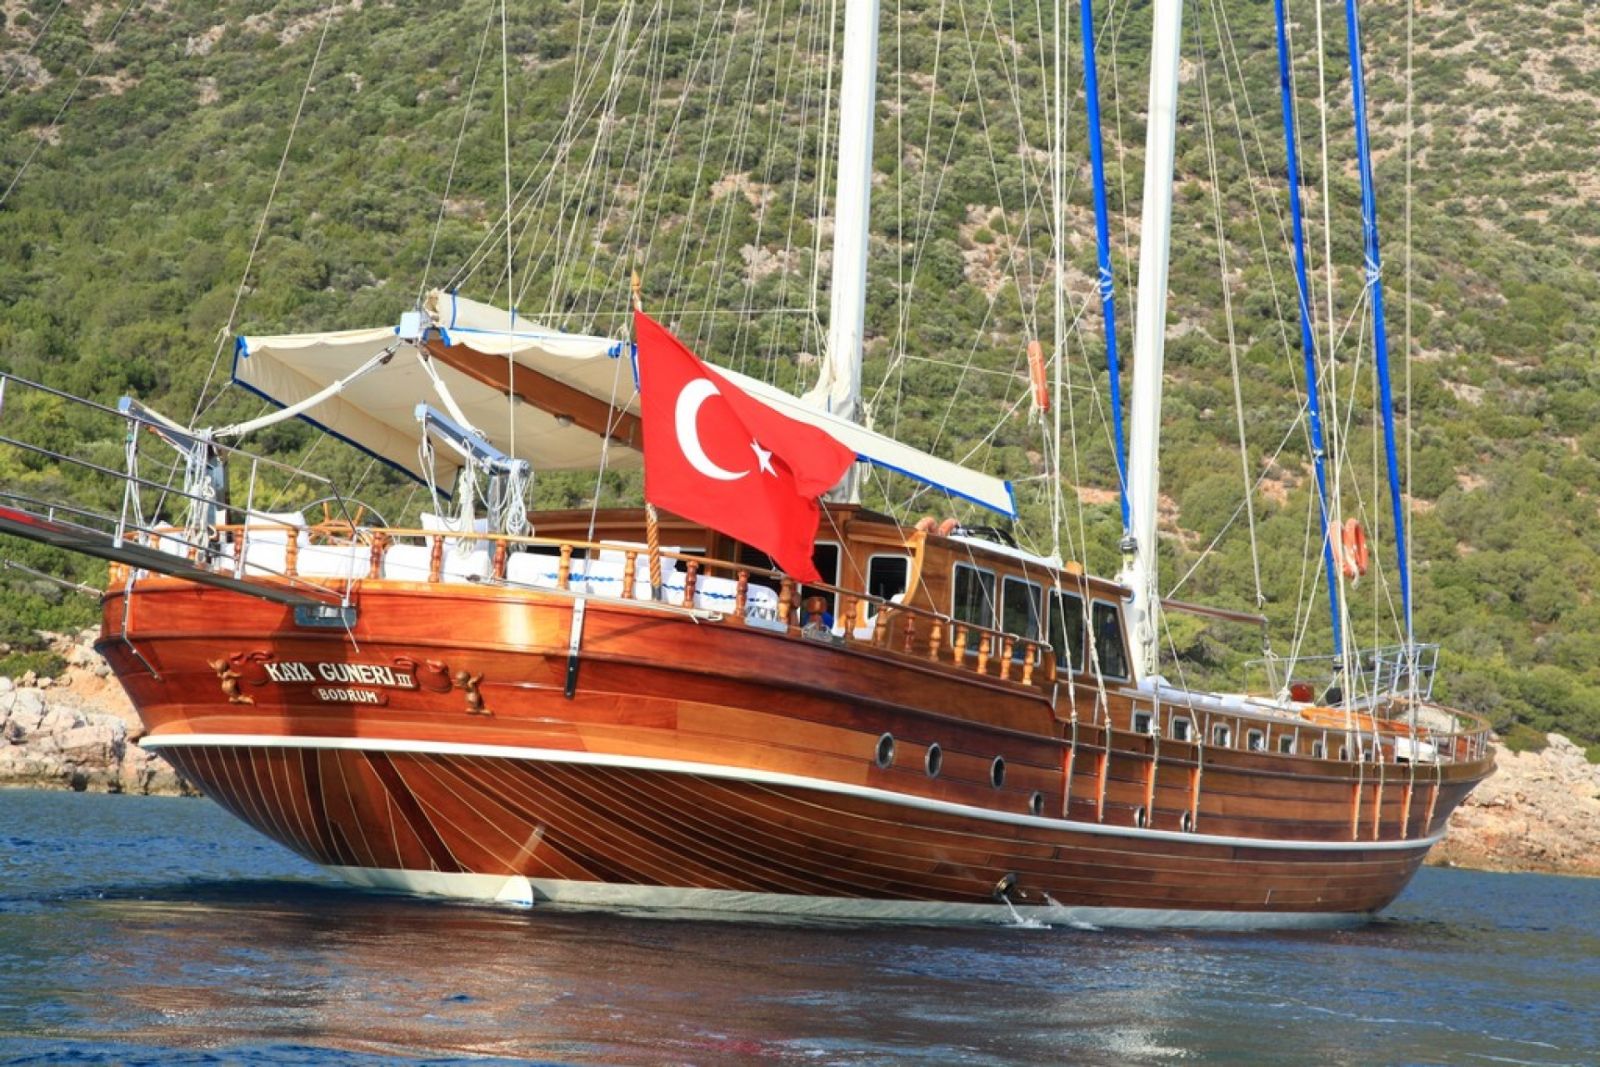 Kaya Guneri III exploring the coastline of Turkey